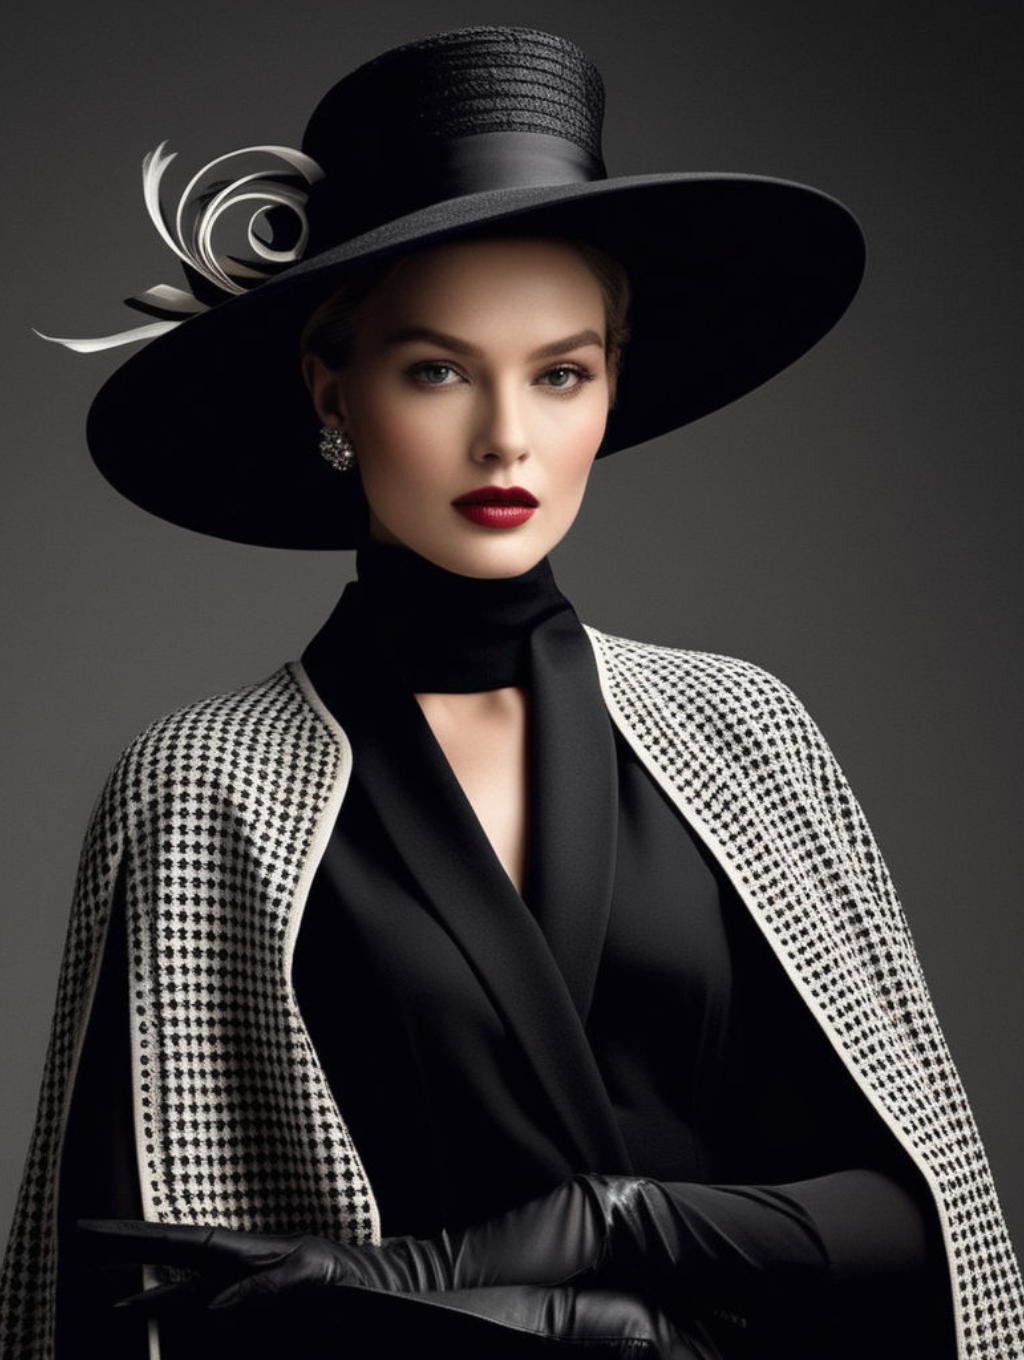 Fashion & Style Women: Profile Pictures & Snapshot Frames-Theme:1